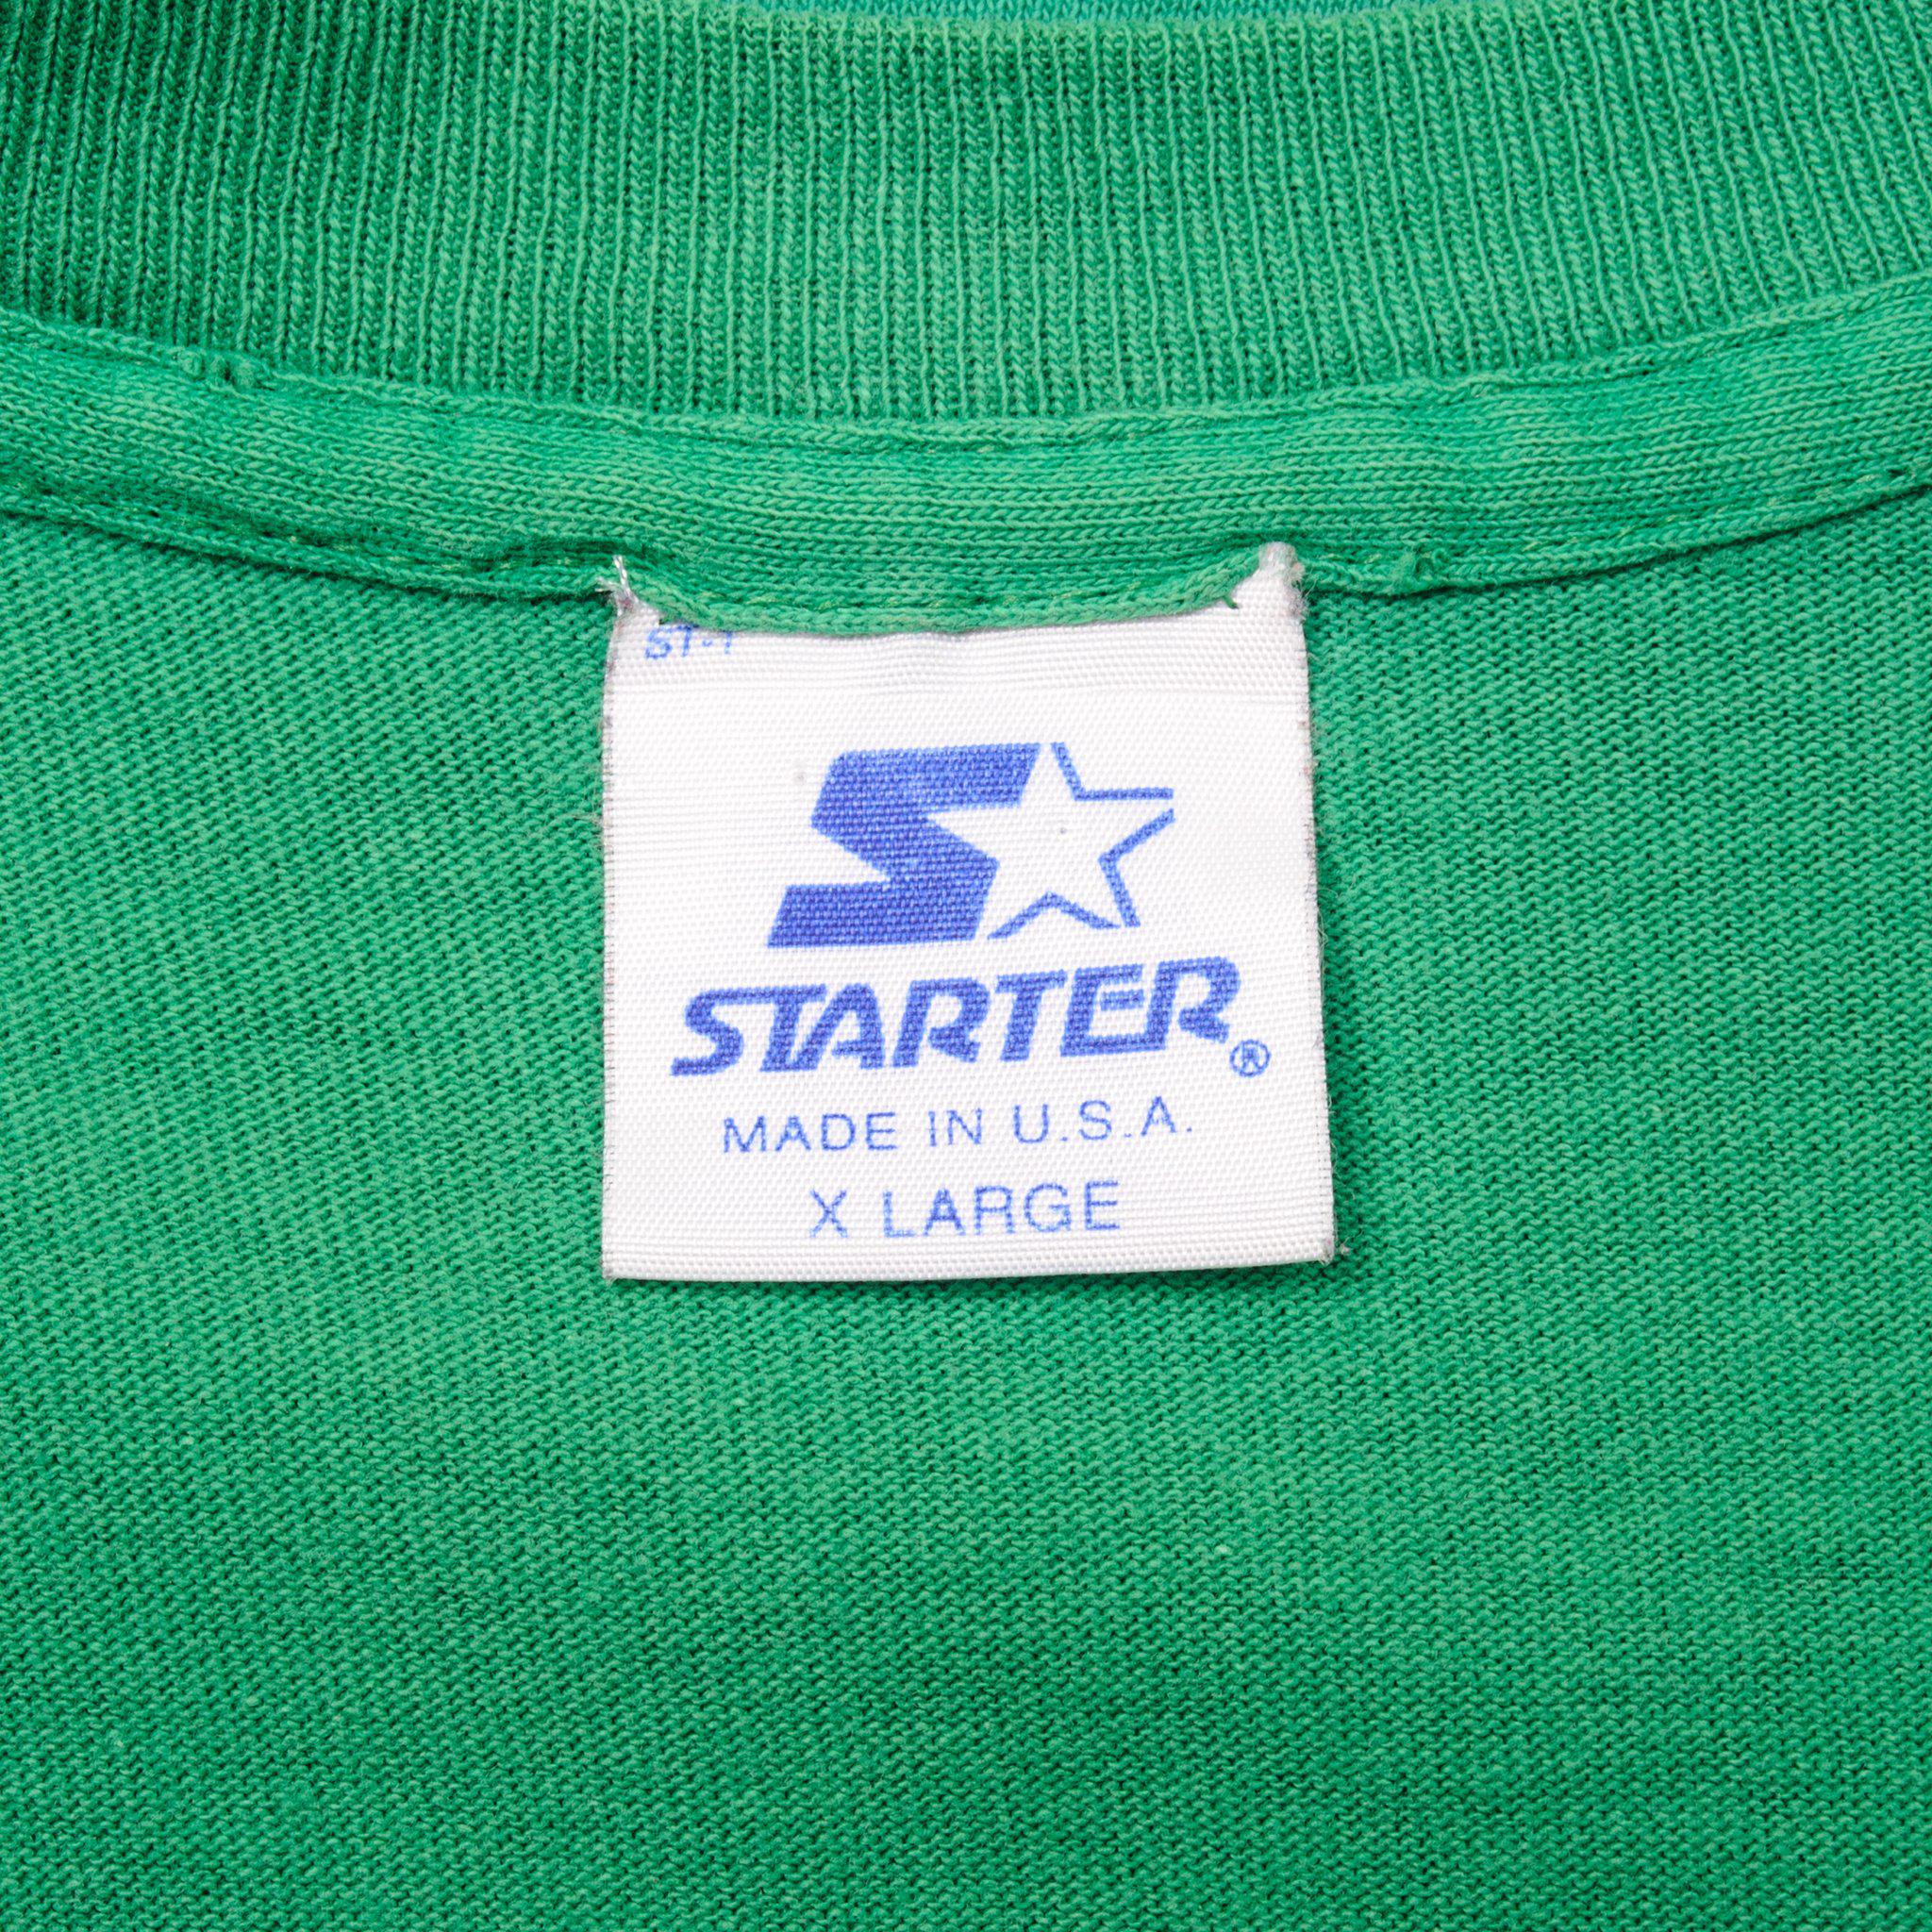 Vintage Starter T-Shirt Tags